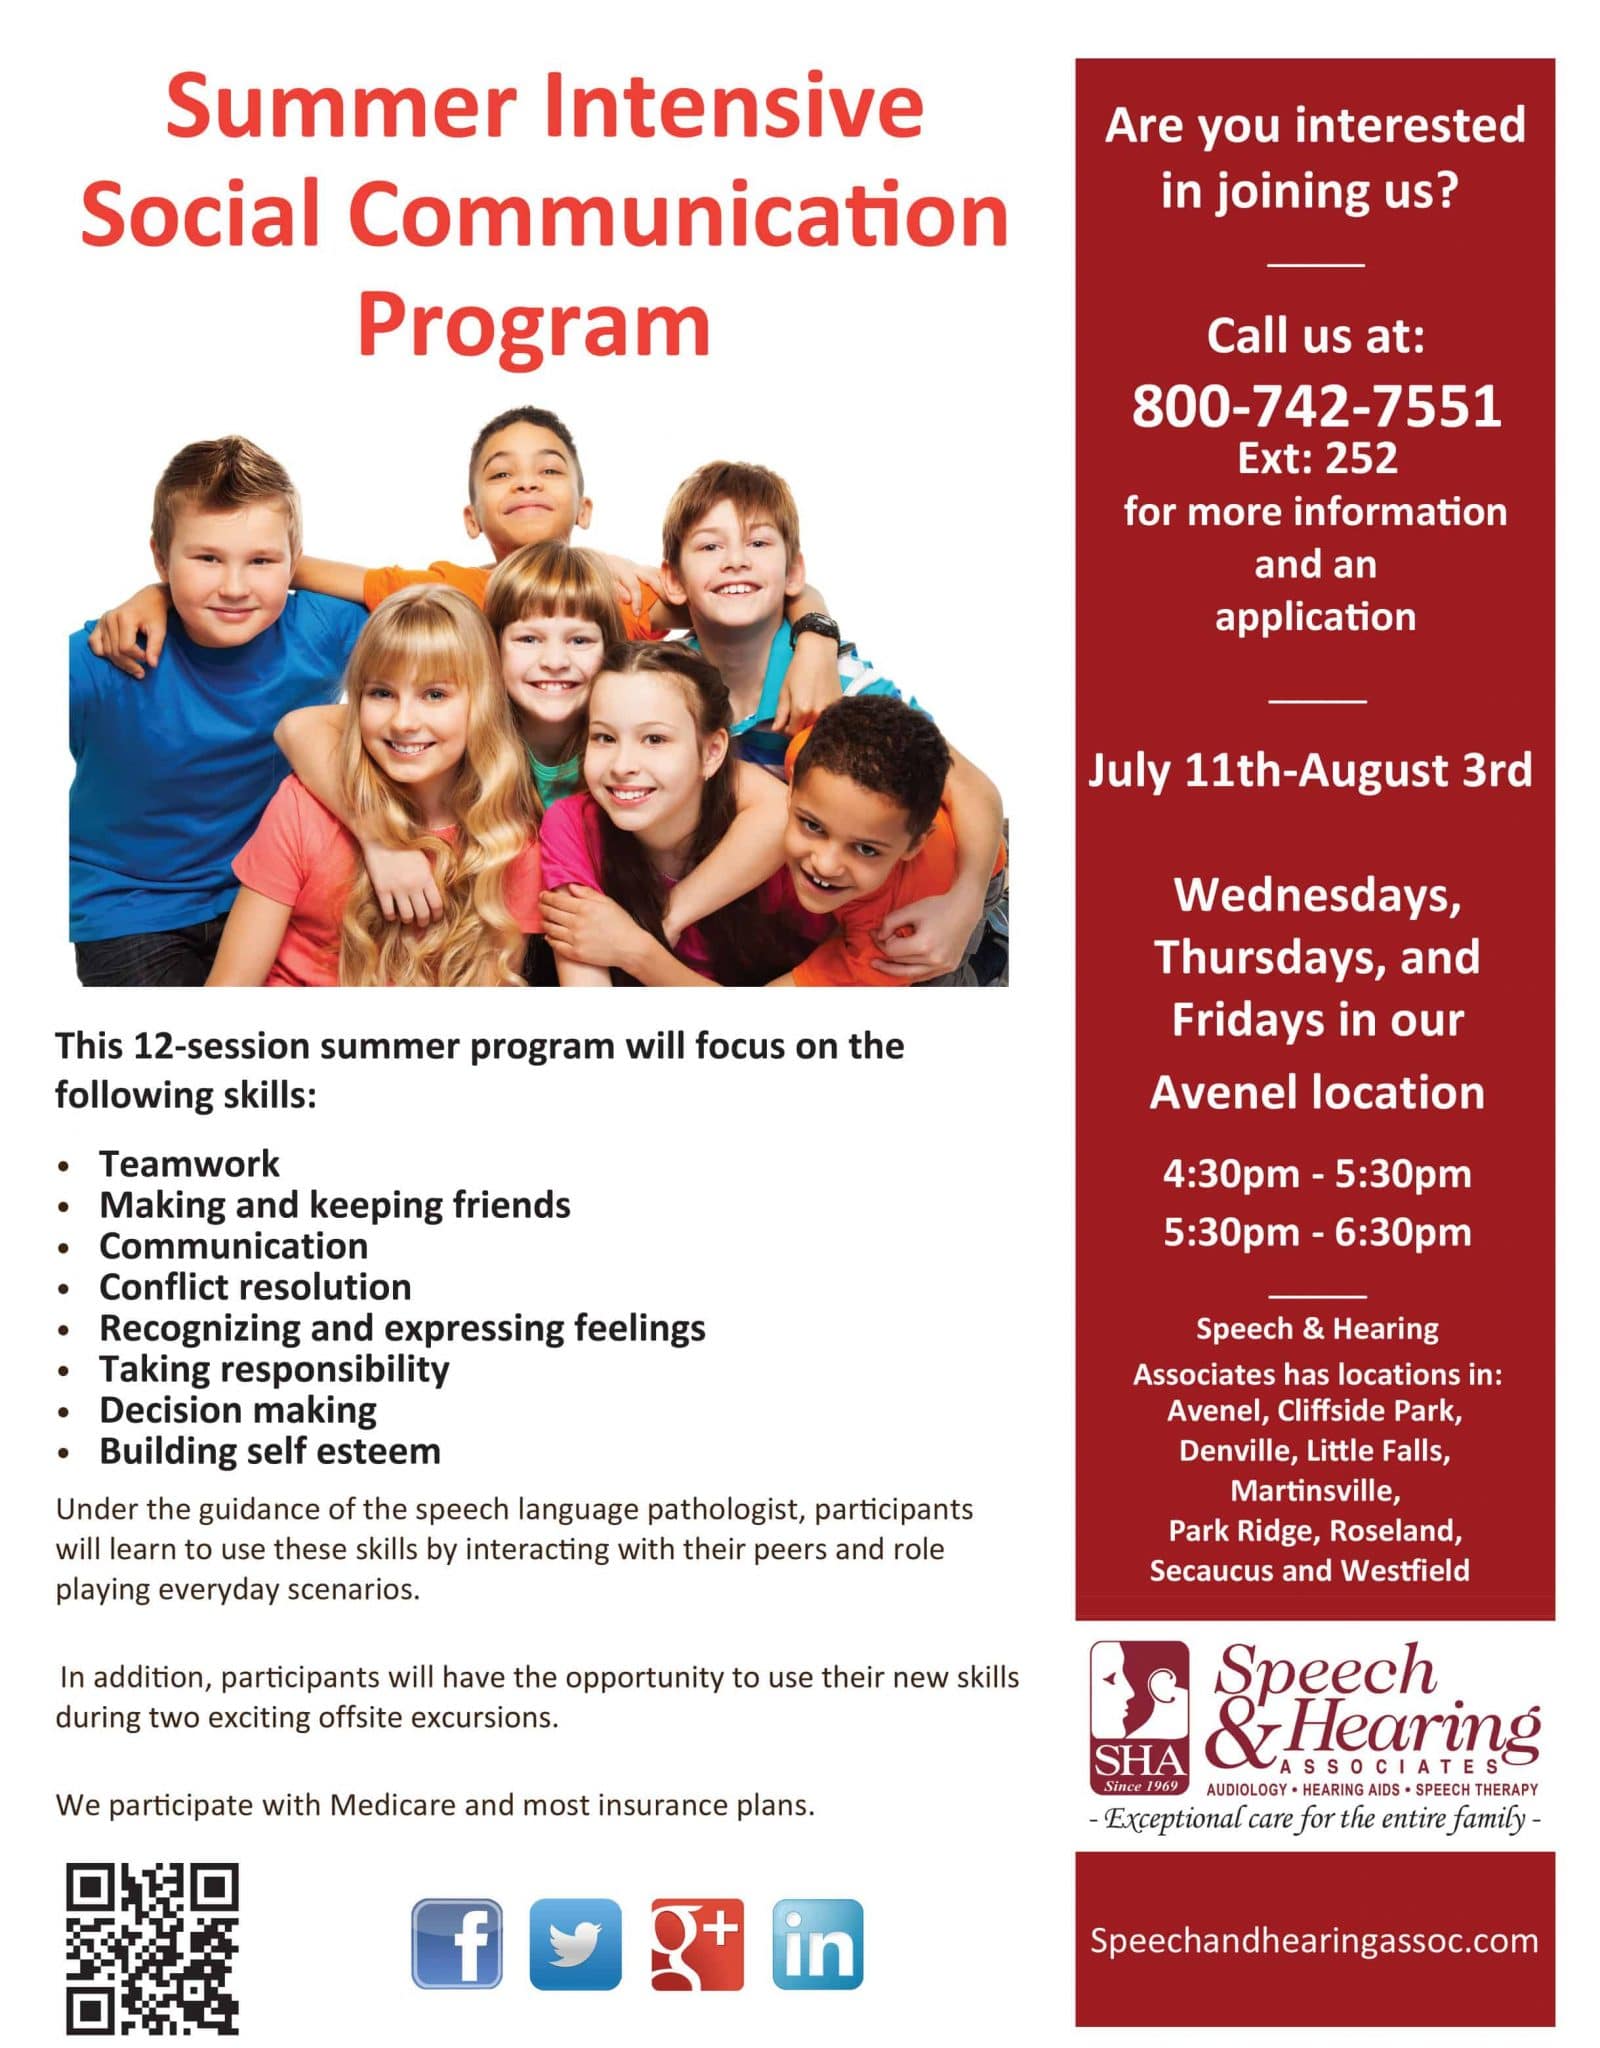 Summer Intensive Social Communication Program